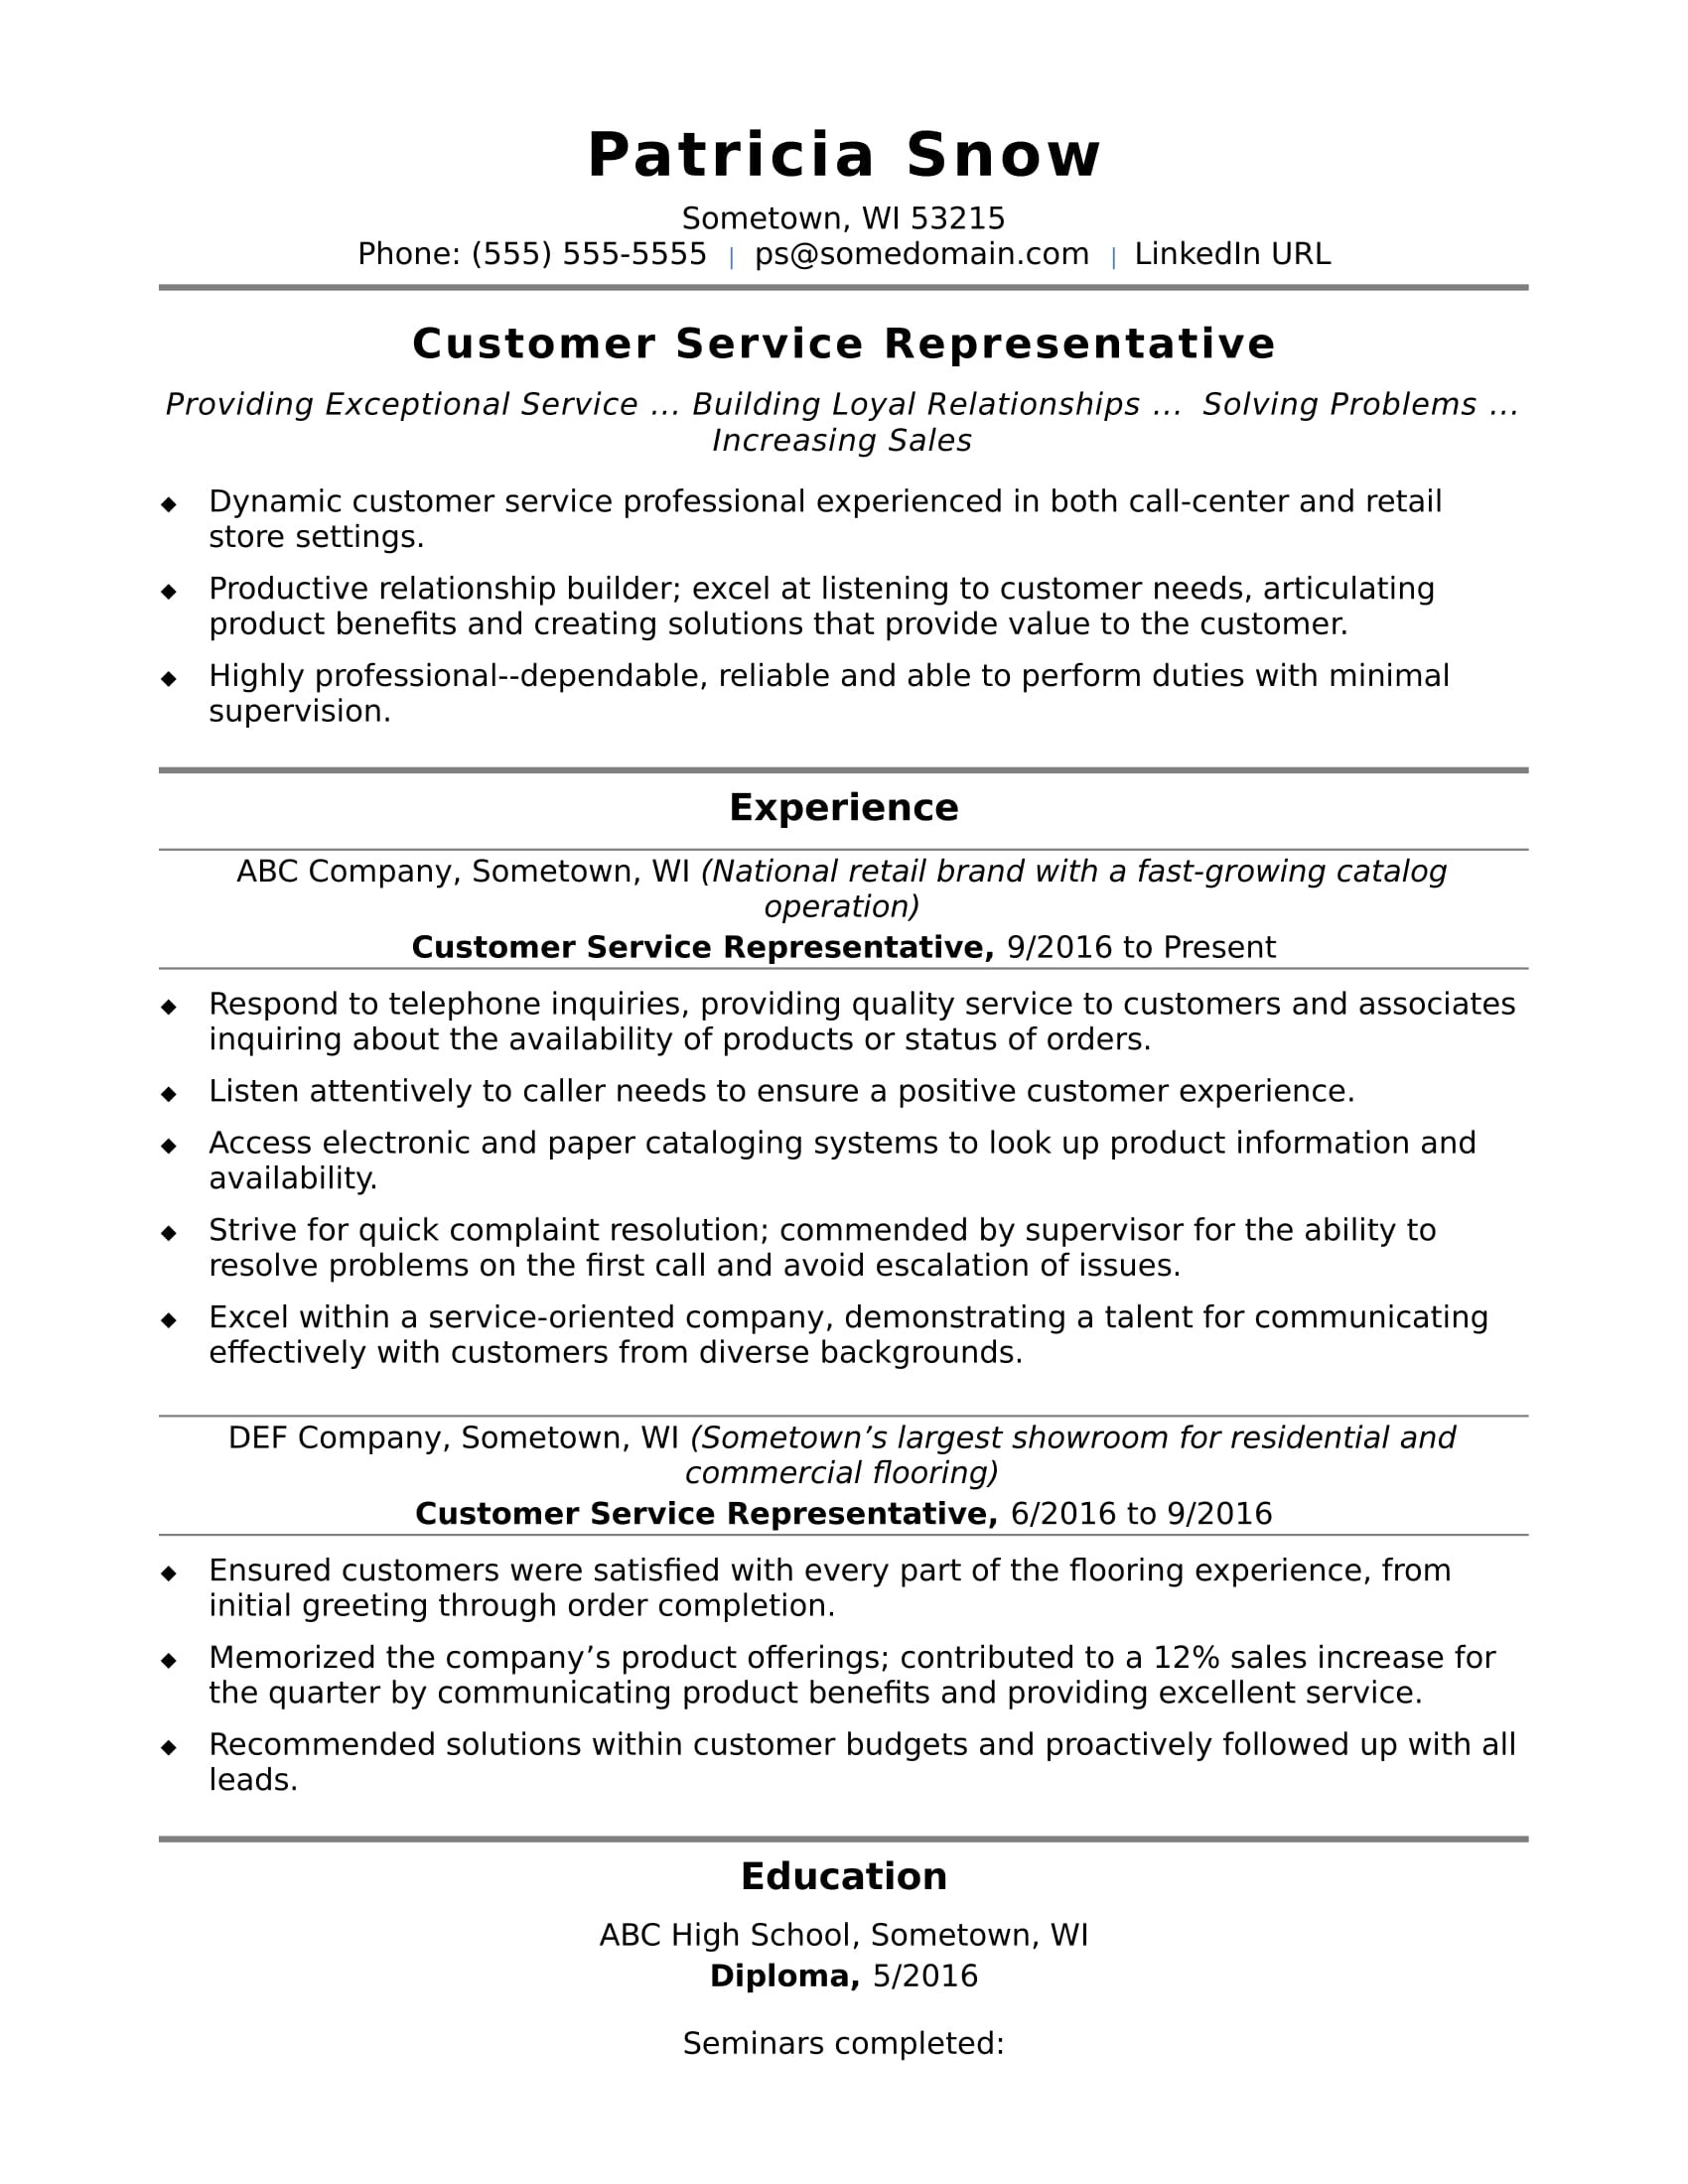 Sample Resume for Guest Service Representative Entry-level Customer Service Resume Sample Monster.com